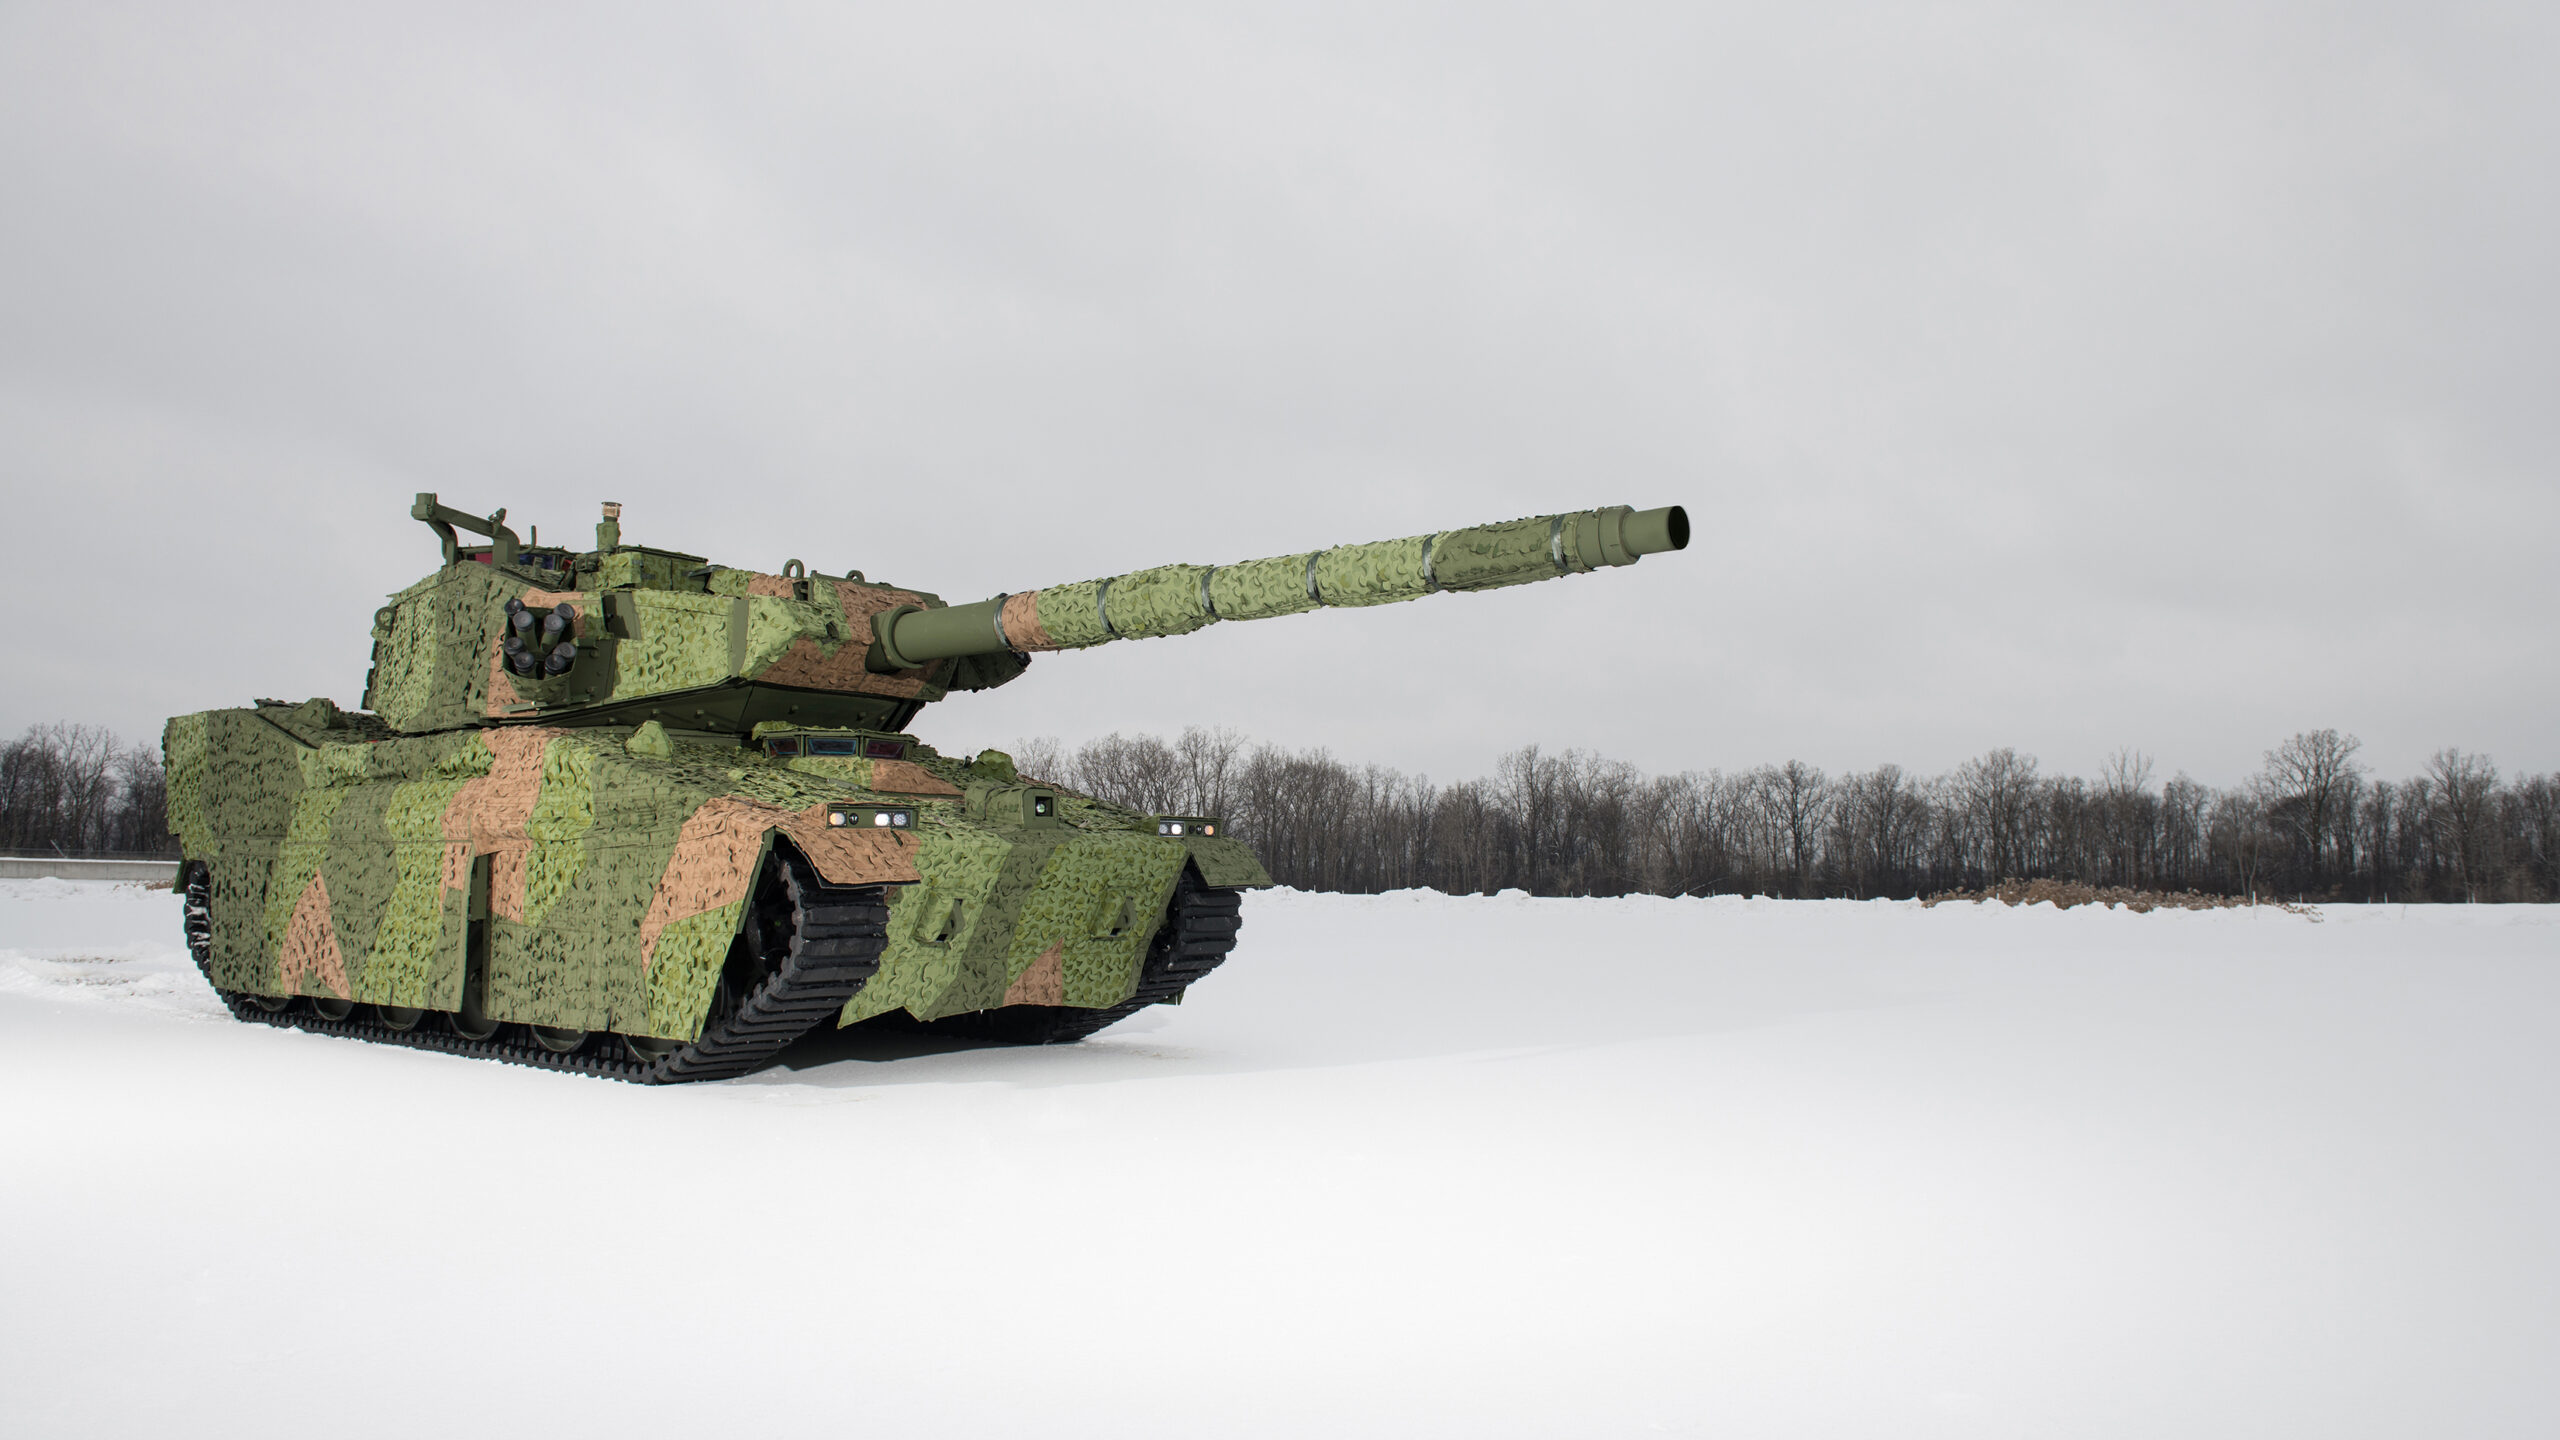 COVID Delays Delivery Of BAE’s MPF Light Tank